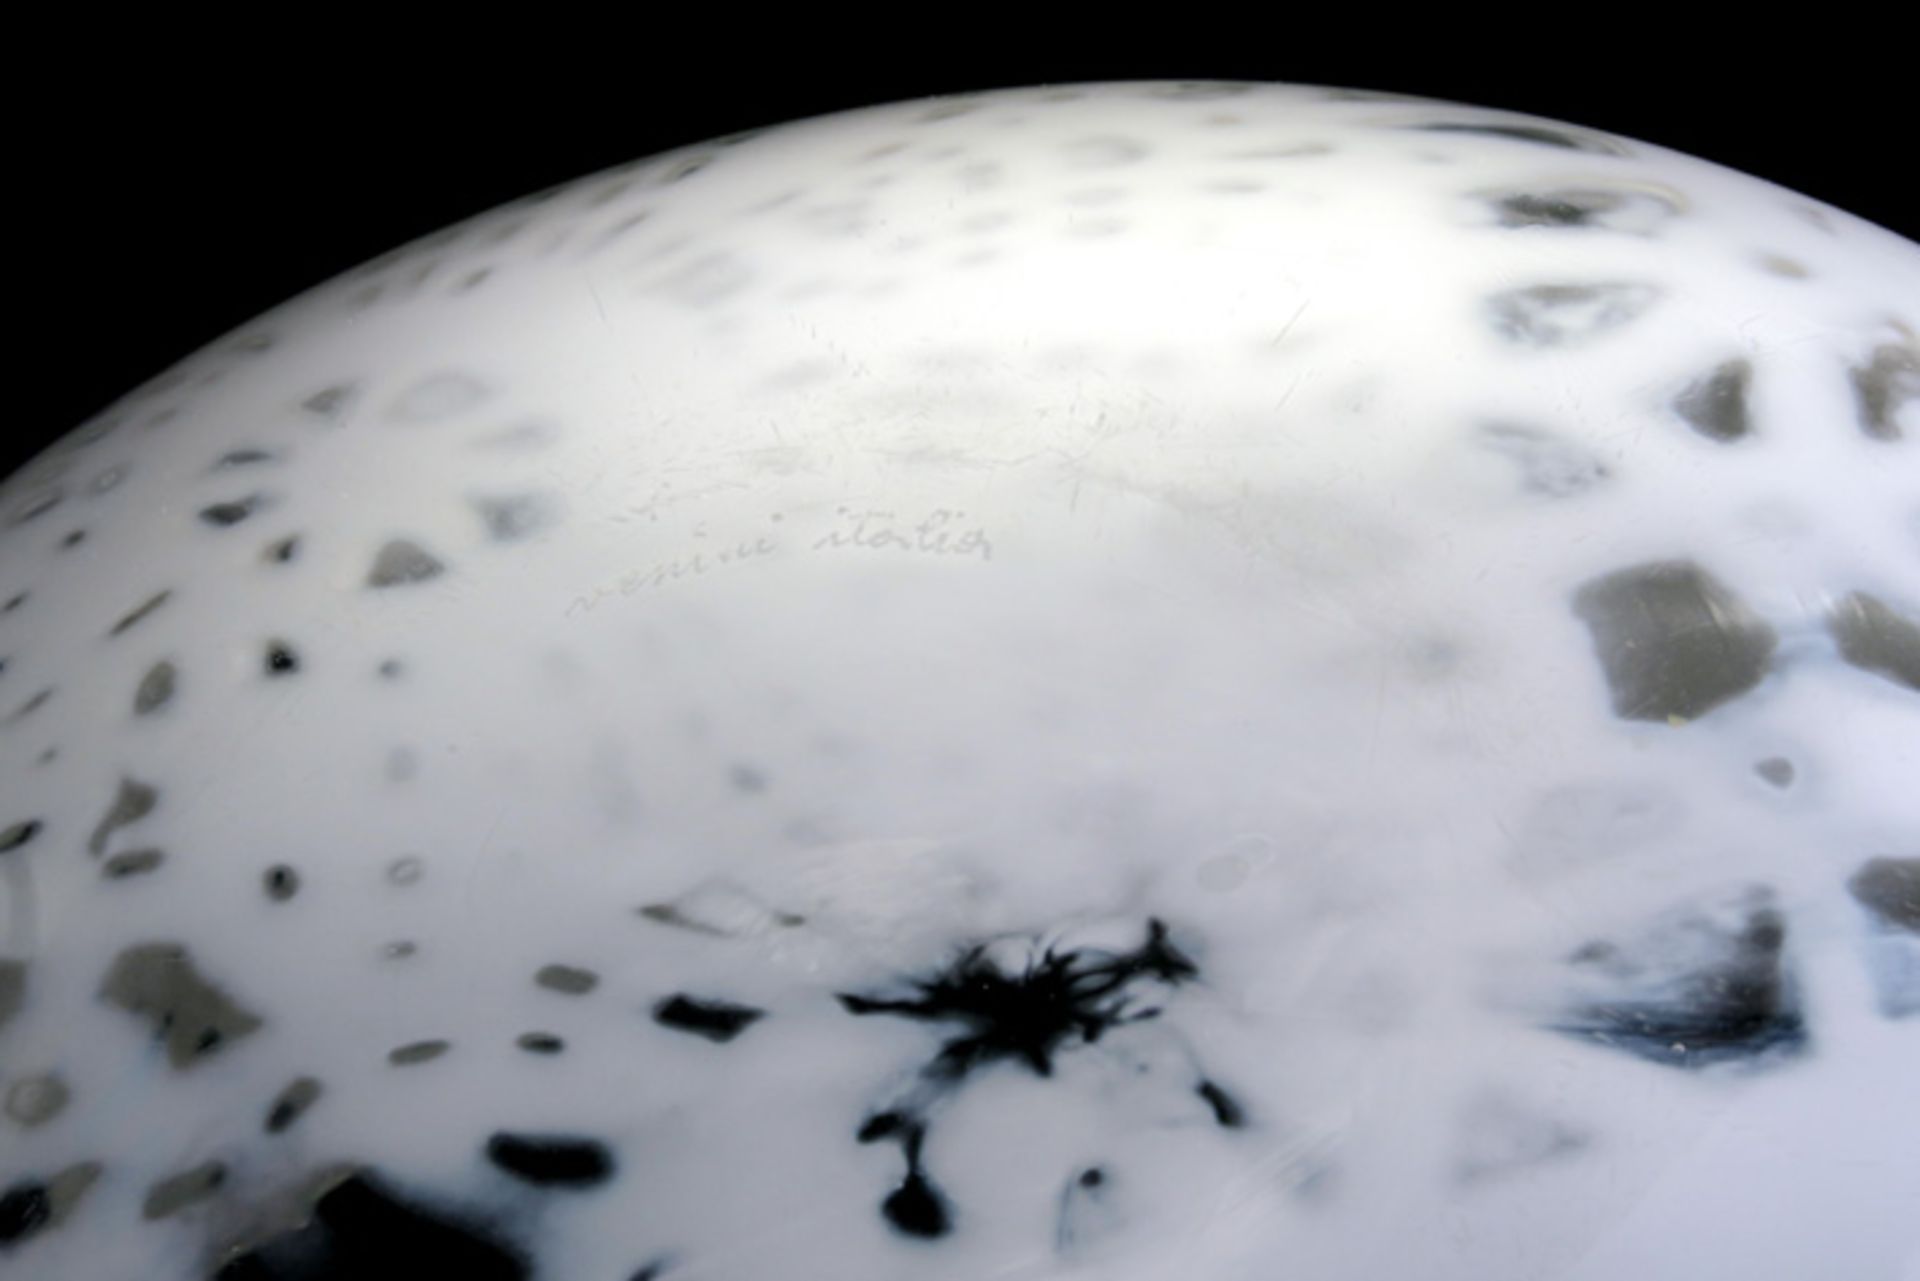 Ove Thorsen & Brigitee Carlsson "Merletto" design bowl in glass by Venini - signed (engraved) Venini - Image 4 of 4